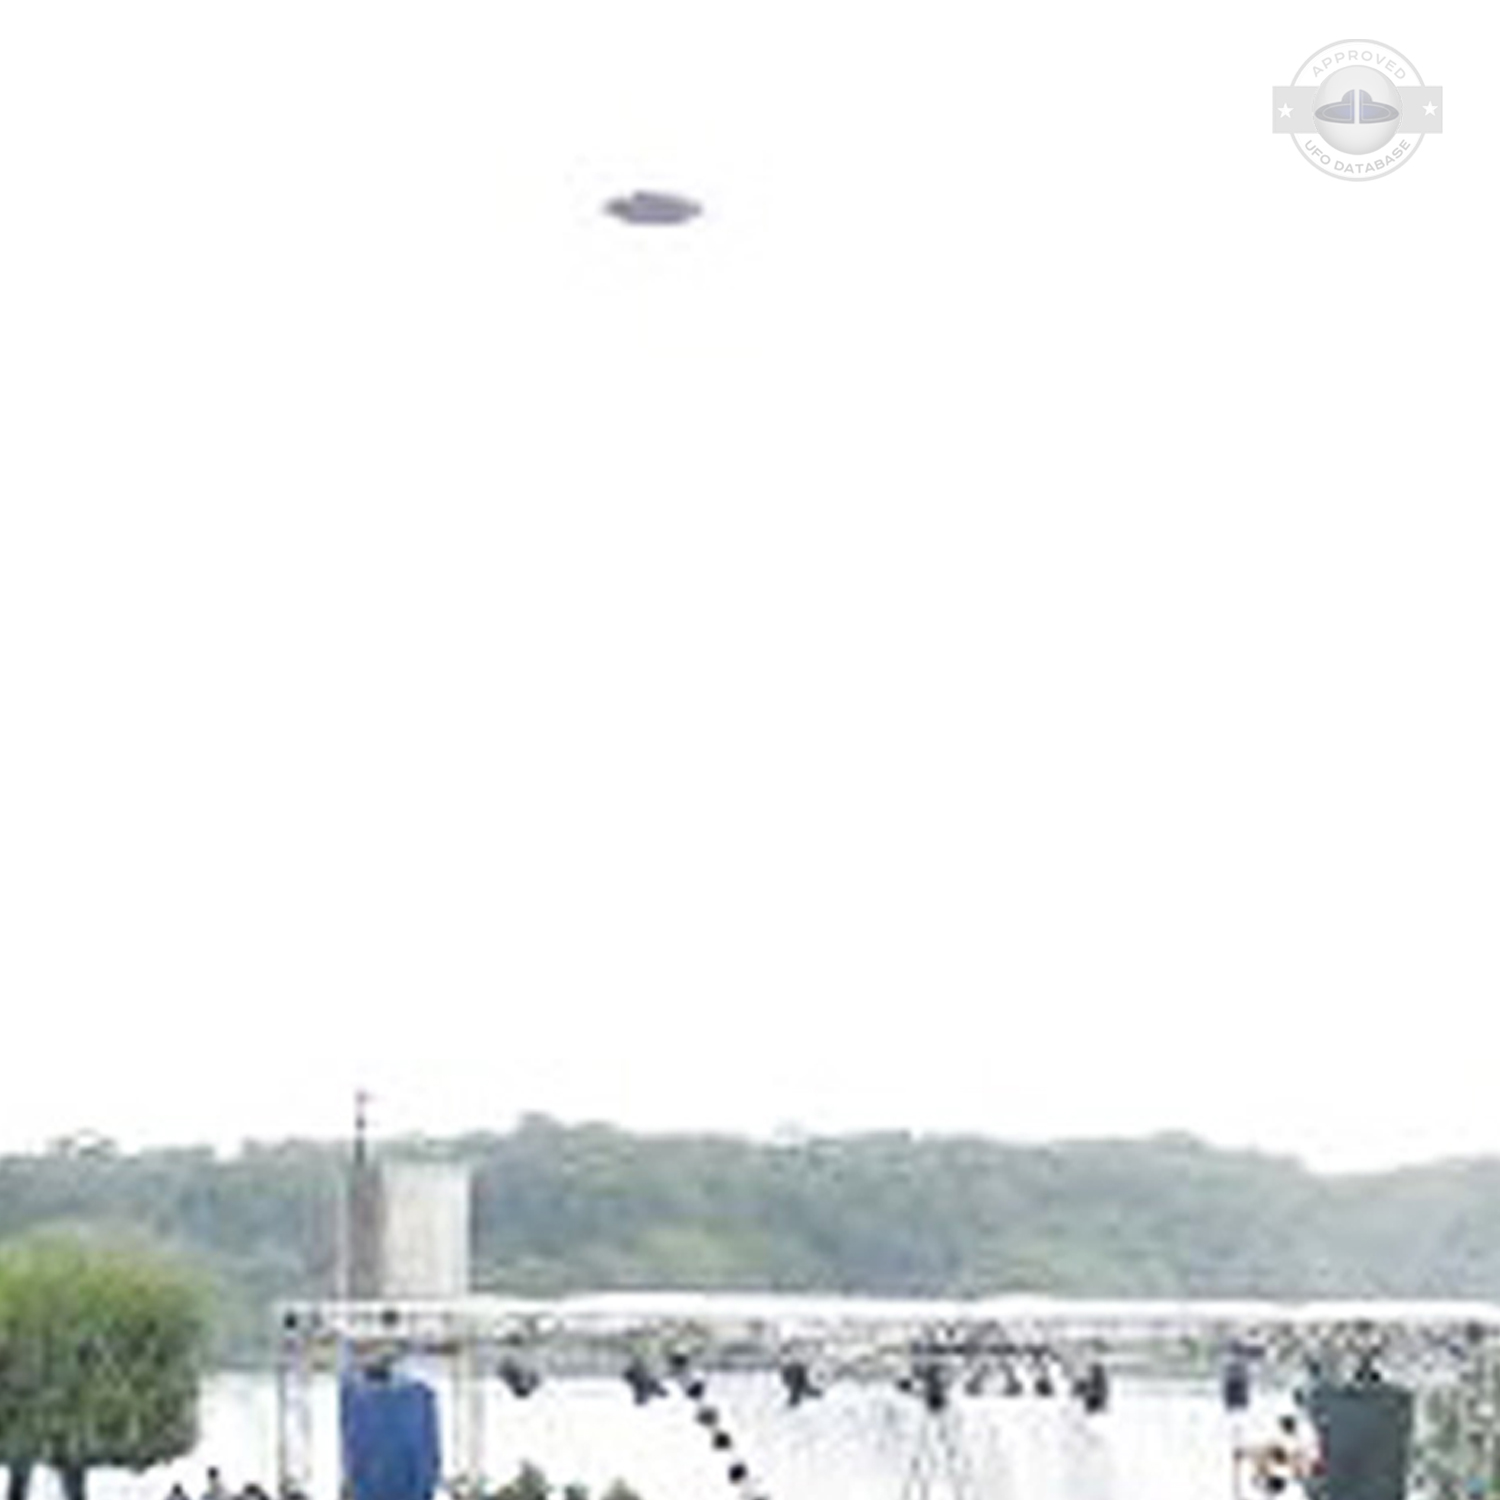 UFO Sighting over Niagara Falls in Ontario | Canada UFO picture 2010 UFO Picture #166-4